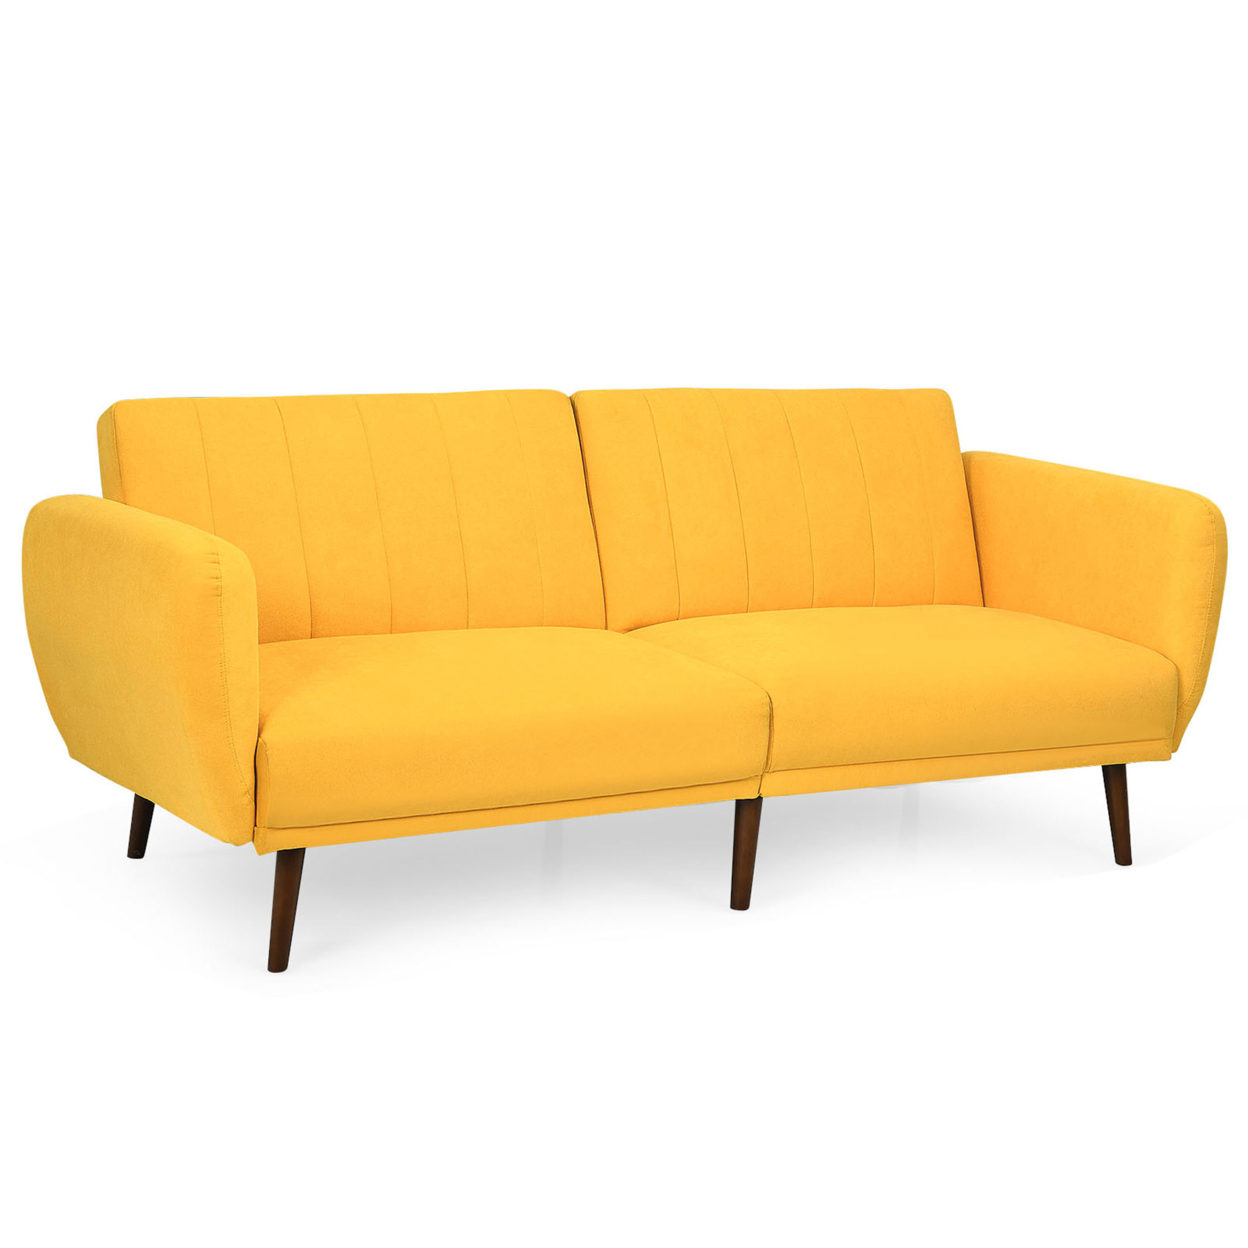 Modern Sofa Bed Convertible Futon Sofa W/ 3-Level Adjustable Angle Function - Yellow